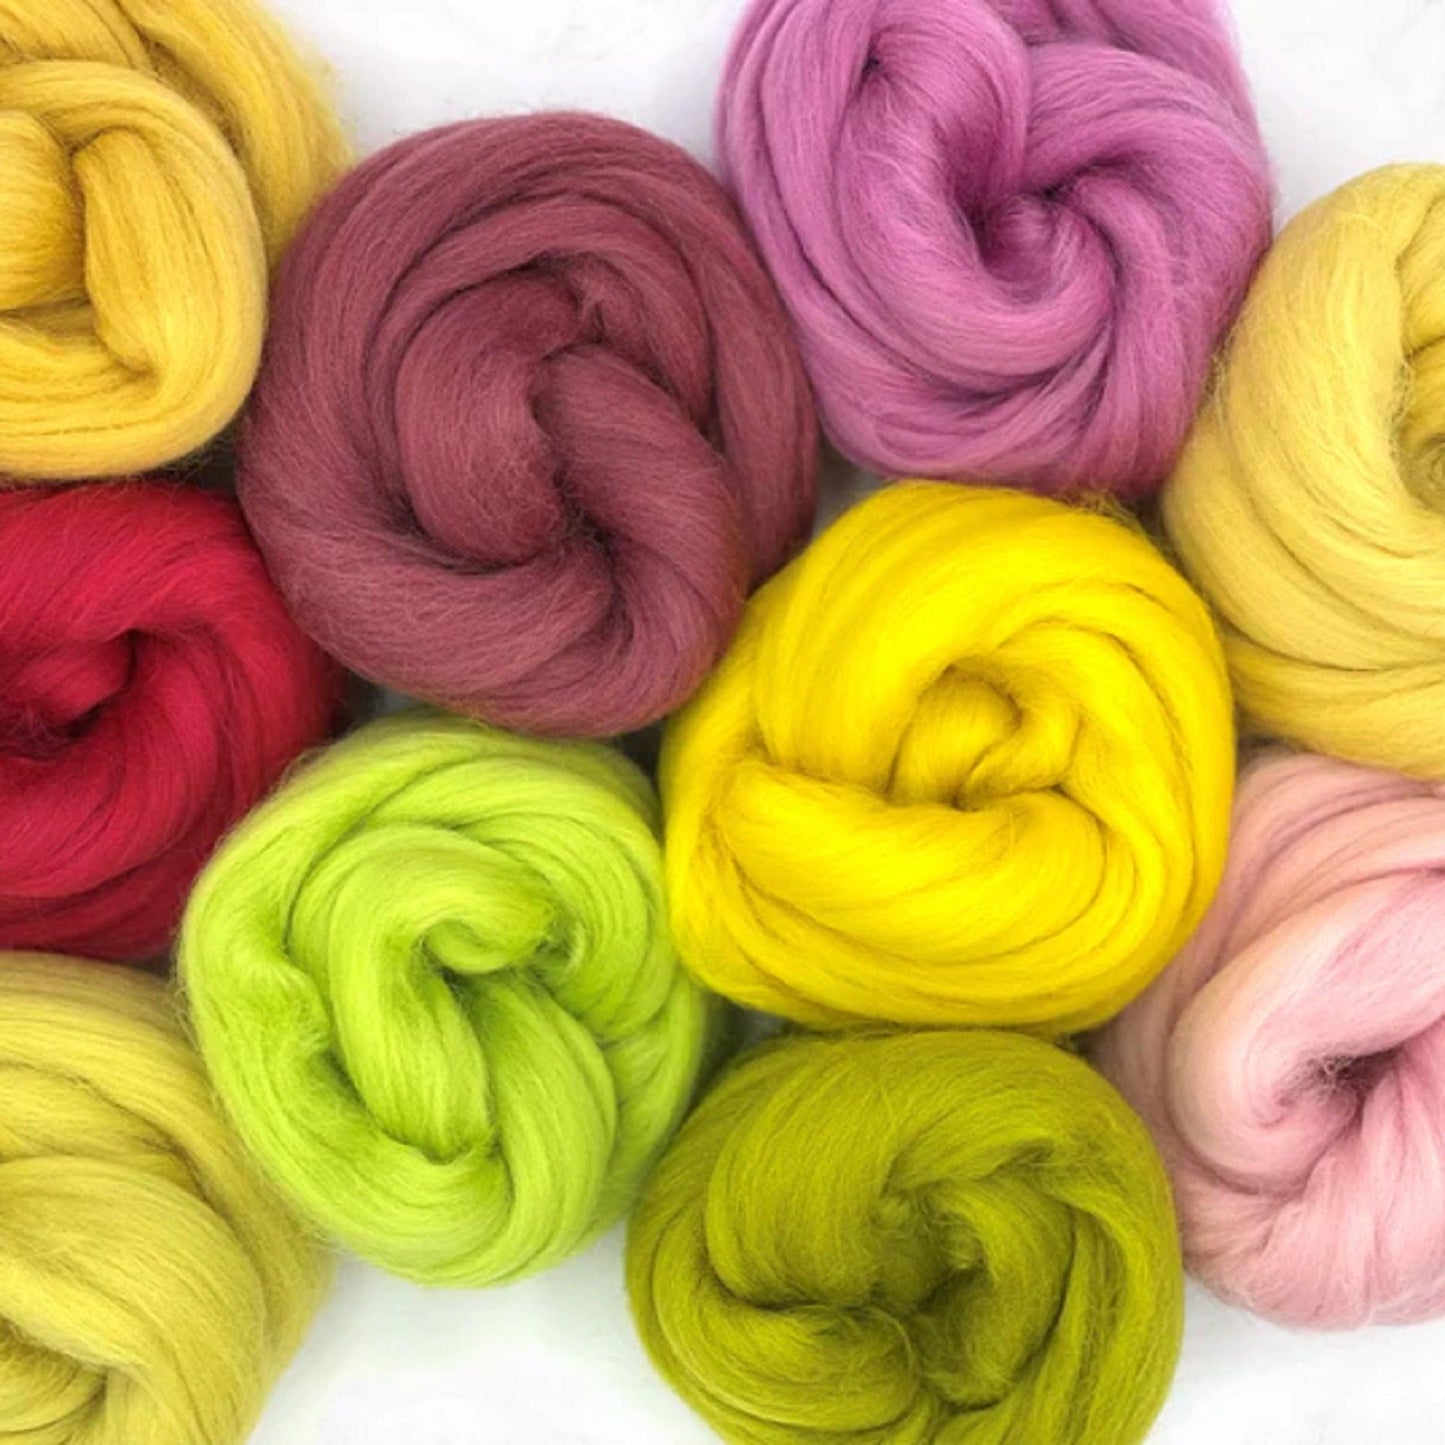 Mixed Merino Wool Variety Pack | Spring Blossom (Multicolored) 250 Grams, 23 Mircon